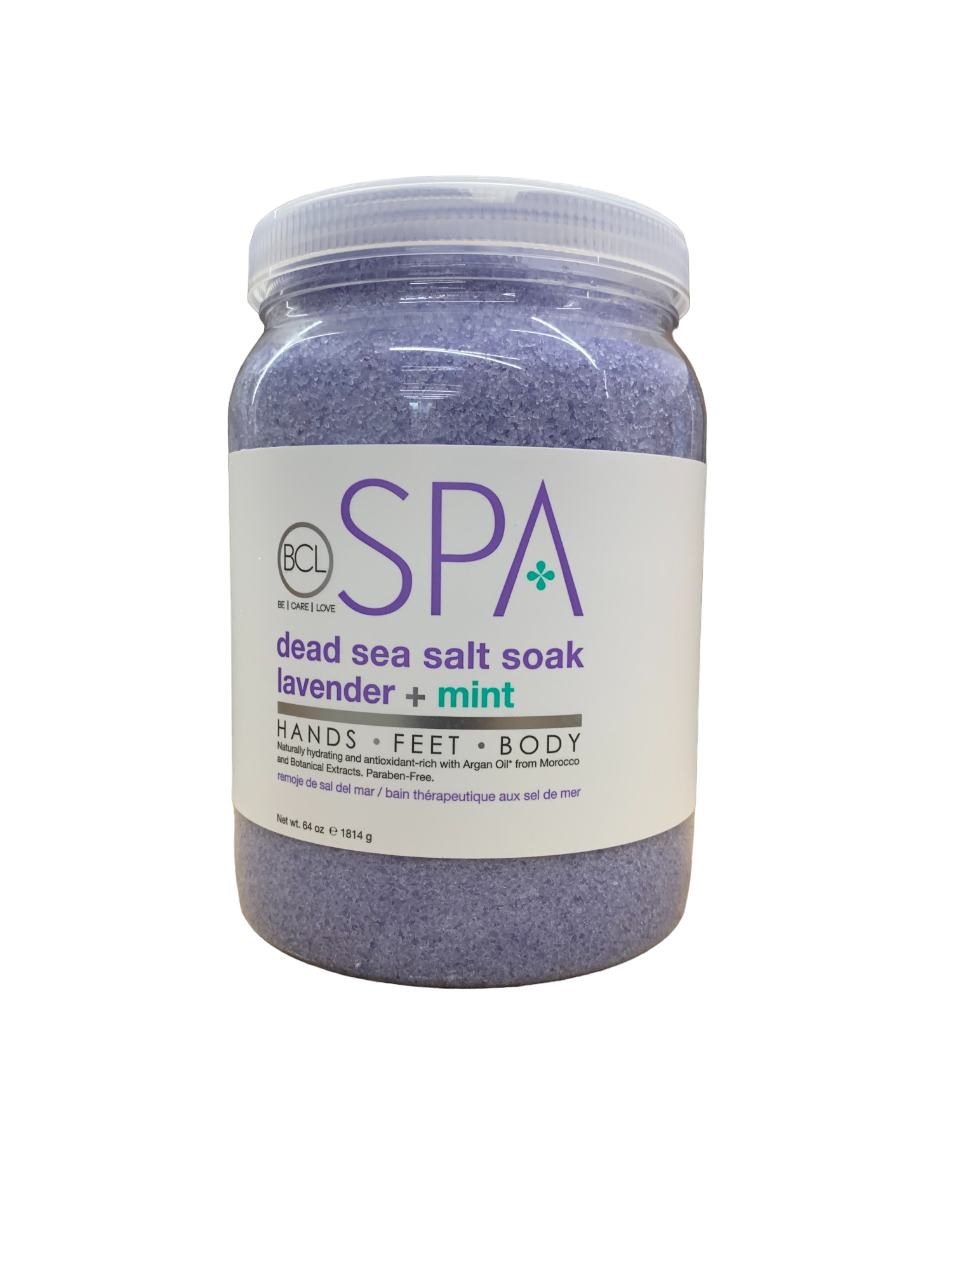 BCL Spa Dead Sea Salt Soak Lavender Mint